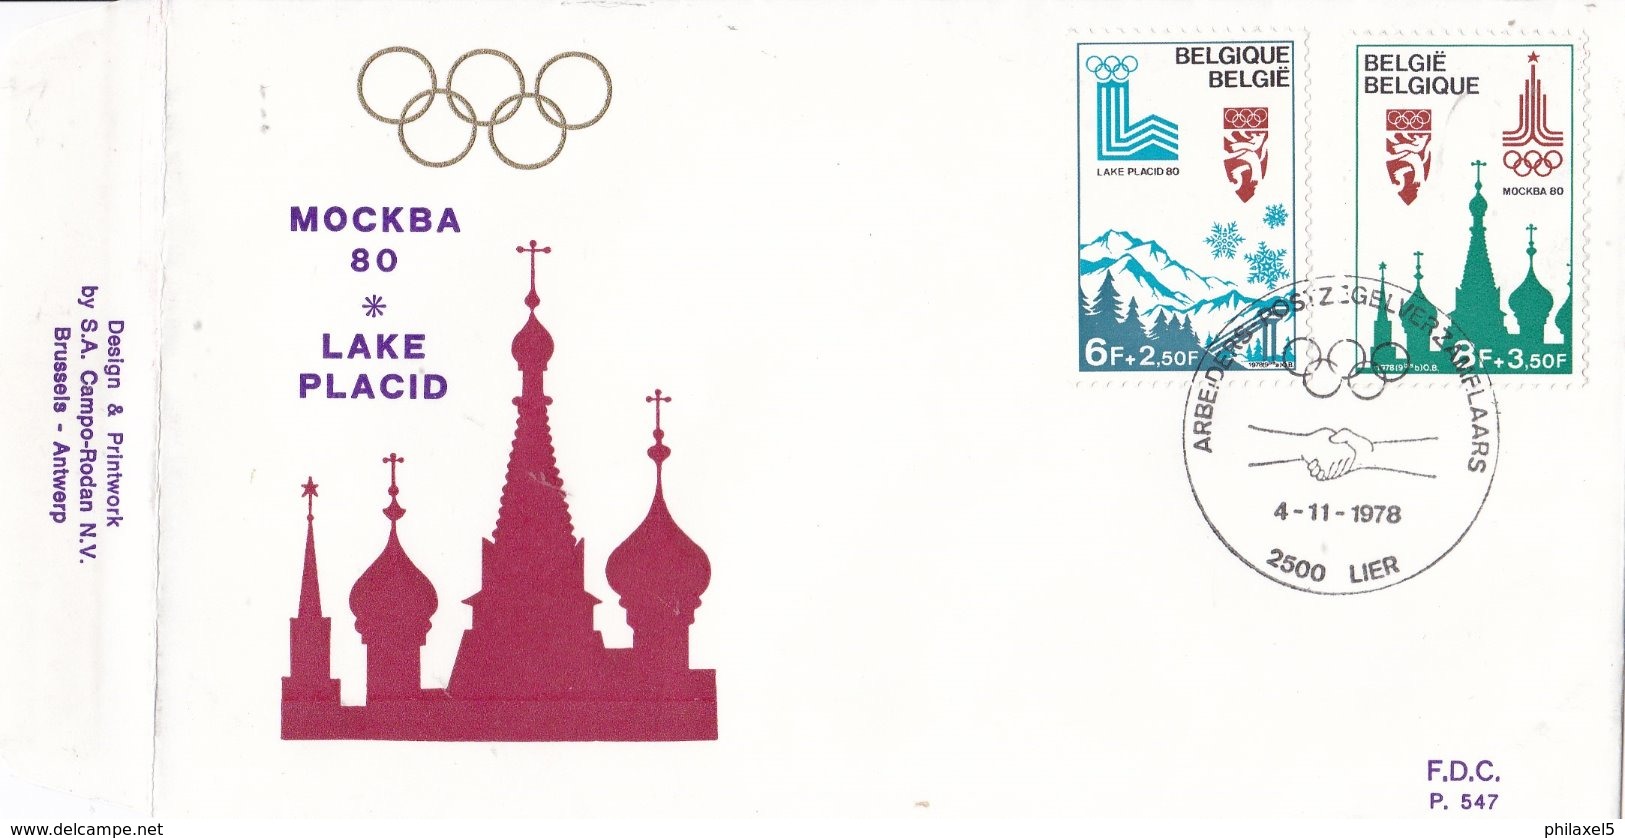 België - FDC 547 - 4 November 1978 - Voorbereiding Der Olympische Spelen 1980 - Moskou/Lake Placid - OBP 1913-1914 - 1971-1980